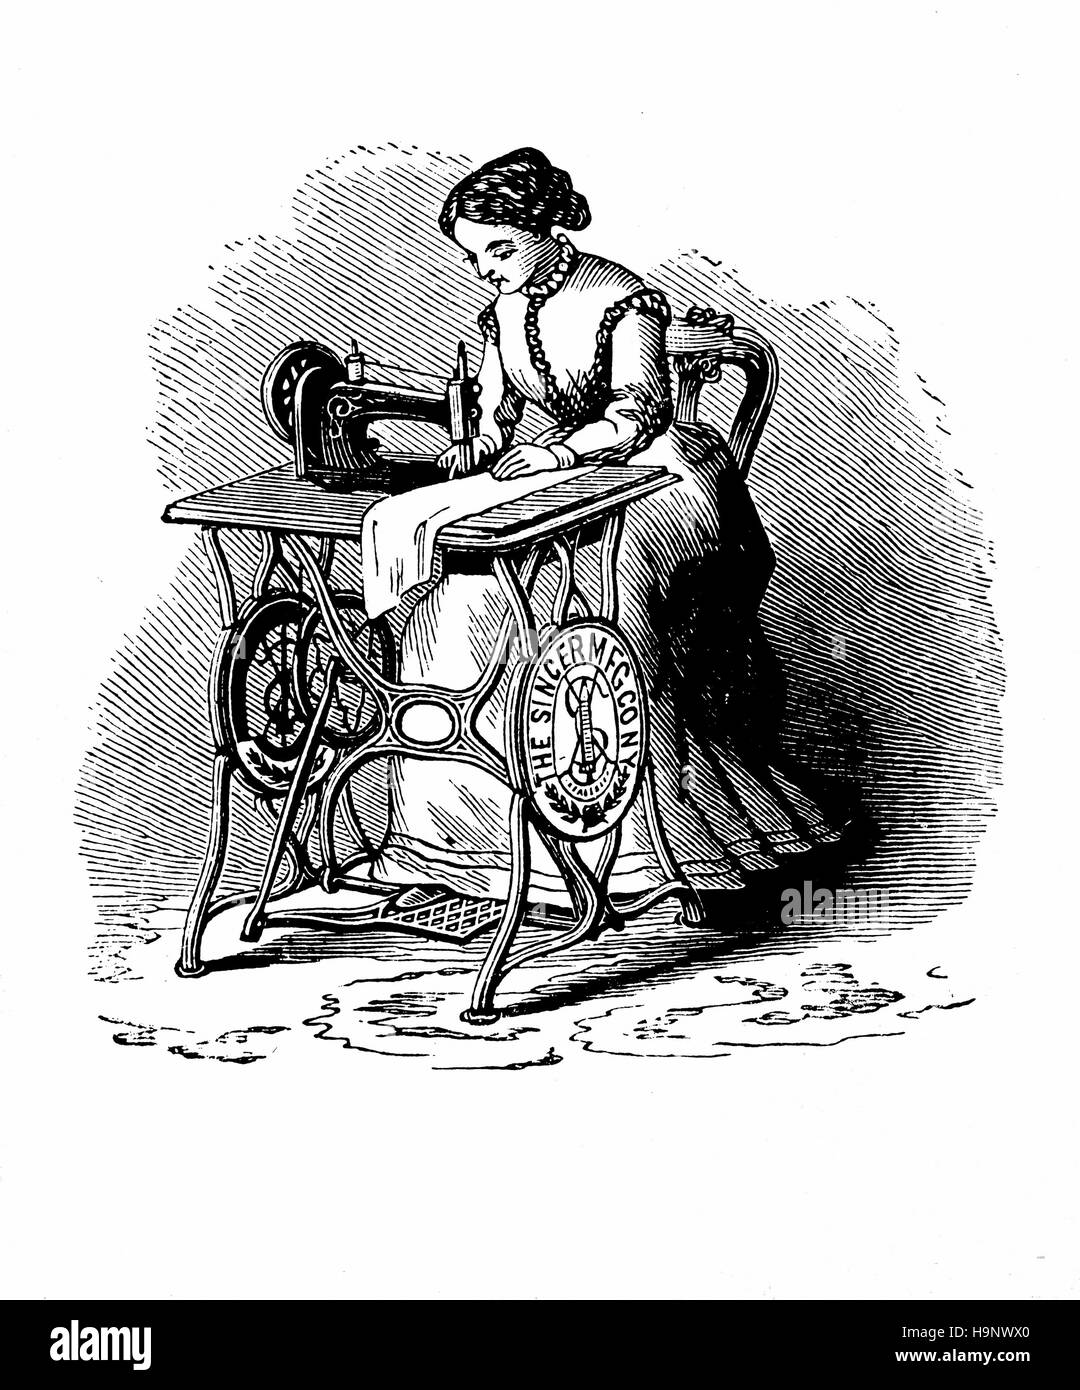 Sewing machine by Isaac Merritt Singer - XIX th century - American engraving Stock Photo